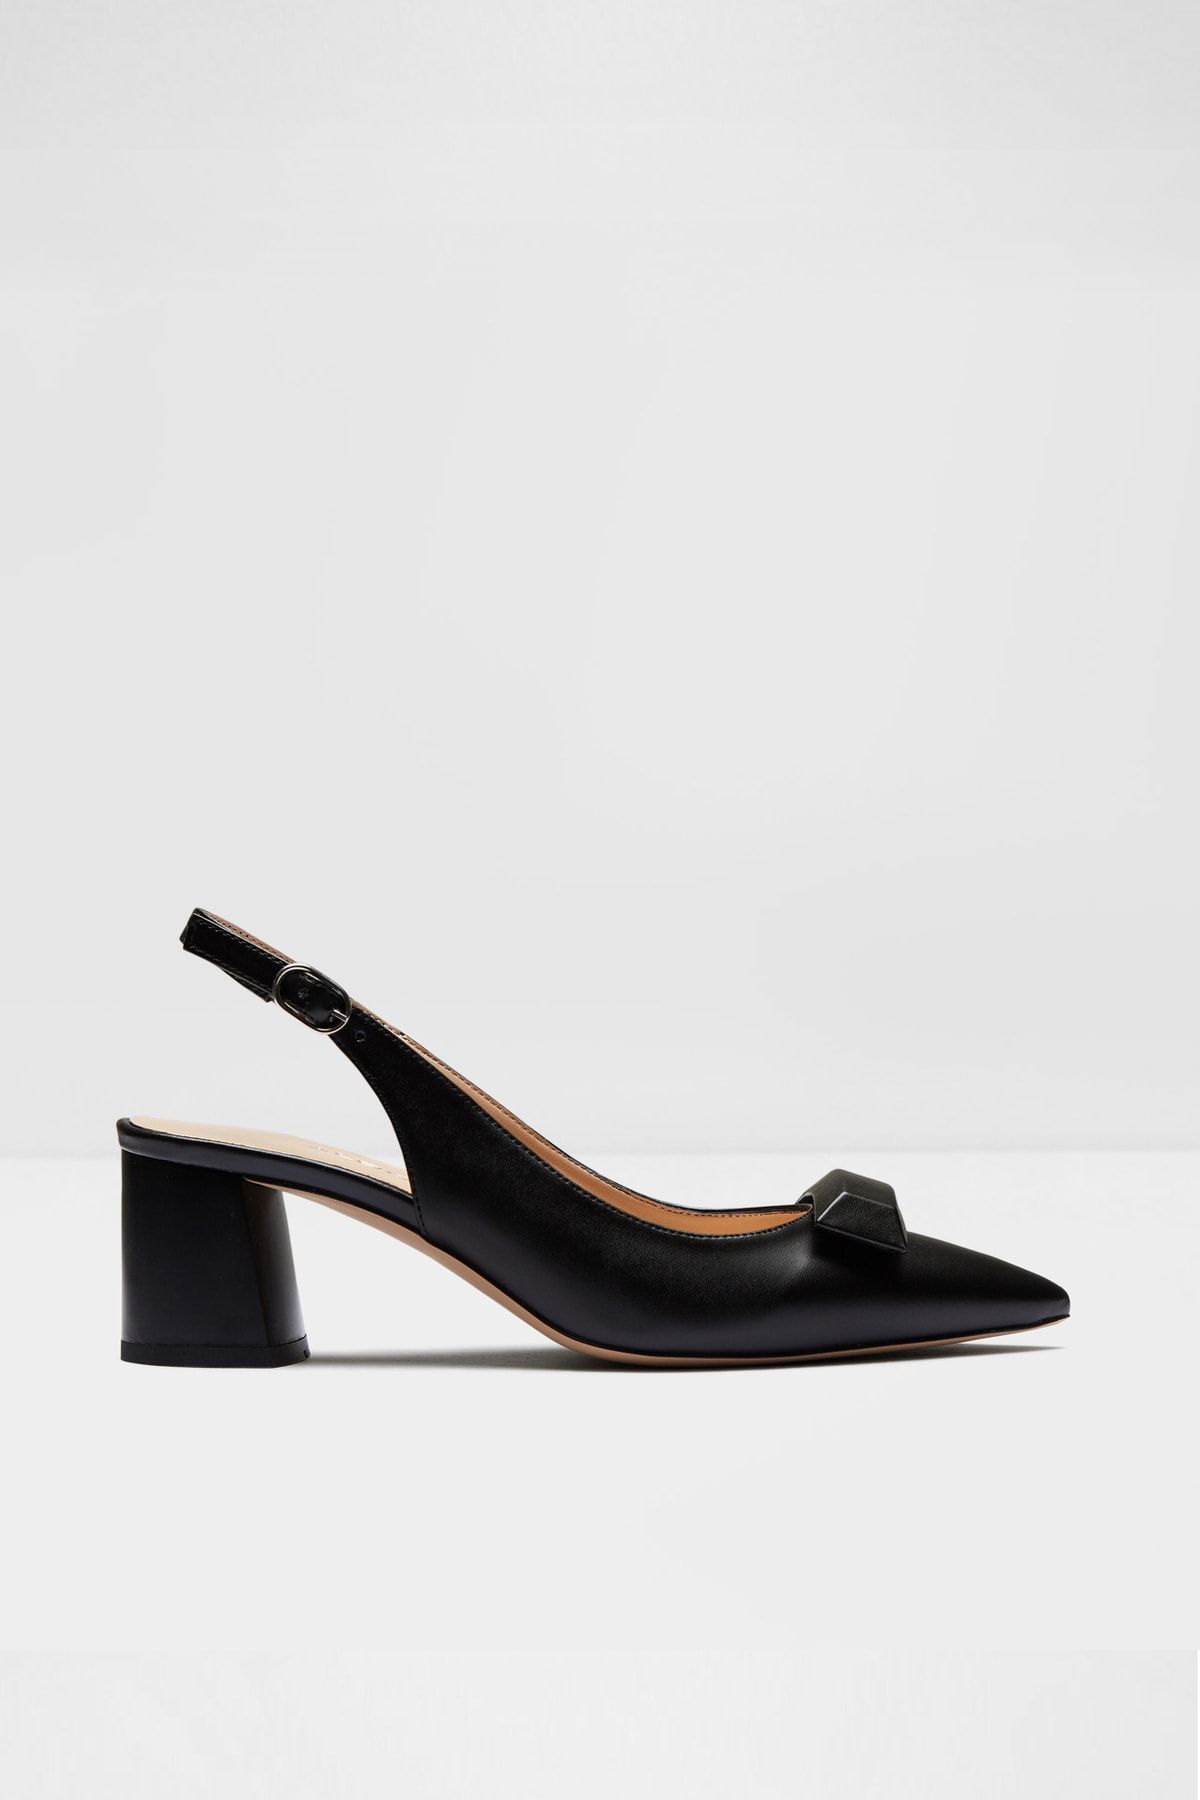 Aldo Mulhouse-tr - Siyah Kadın Topuklu Ayakkabı